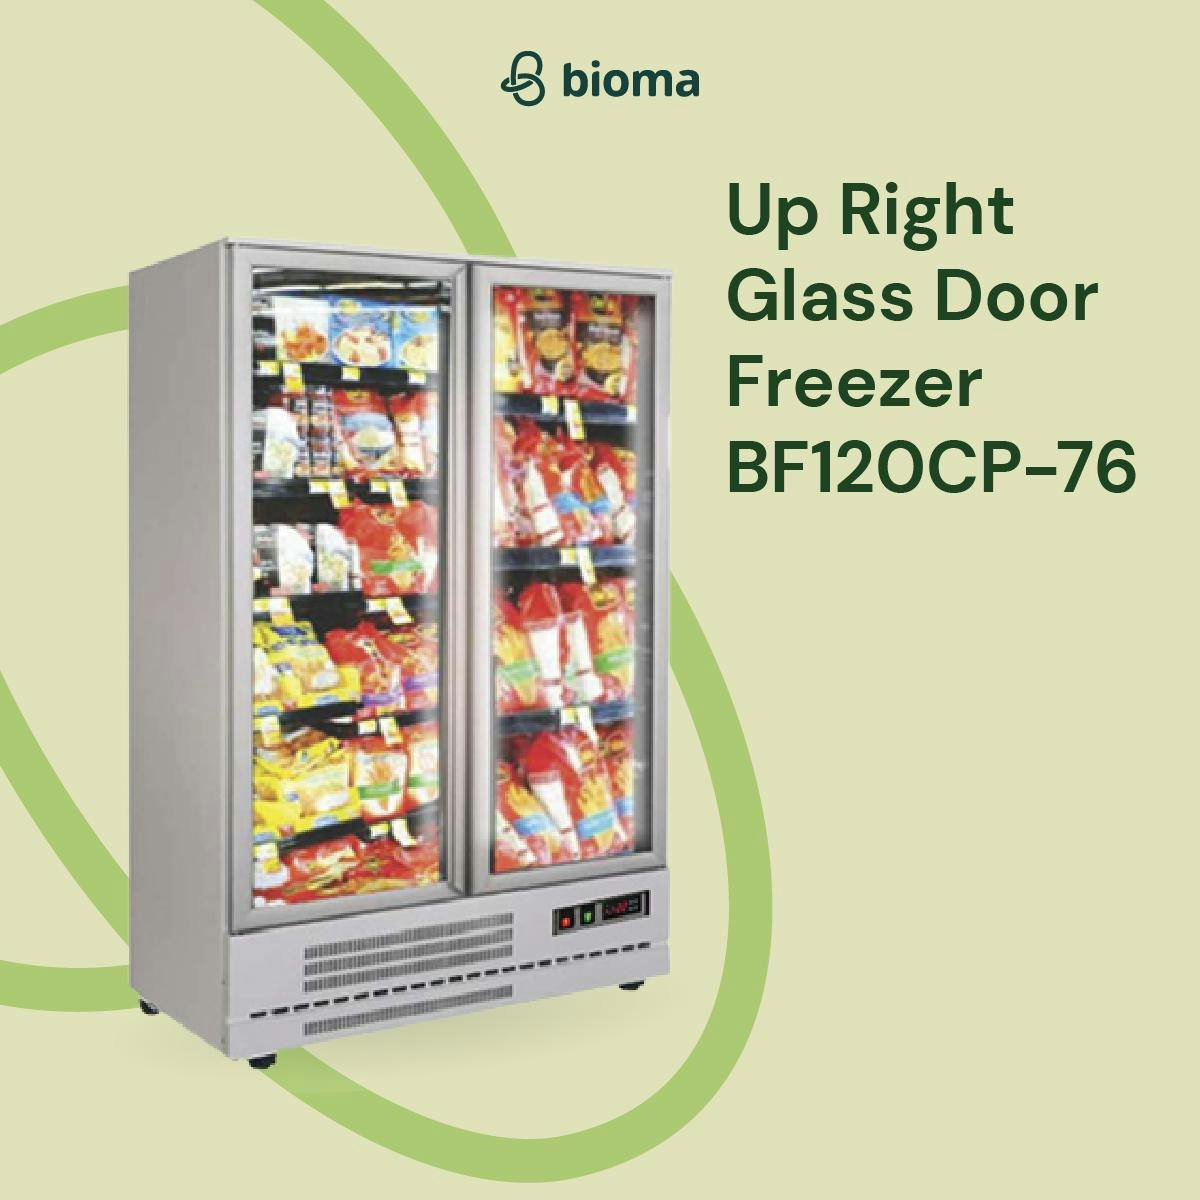 Up Right Glass Door Freezer BF120CP-76